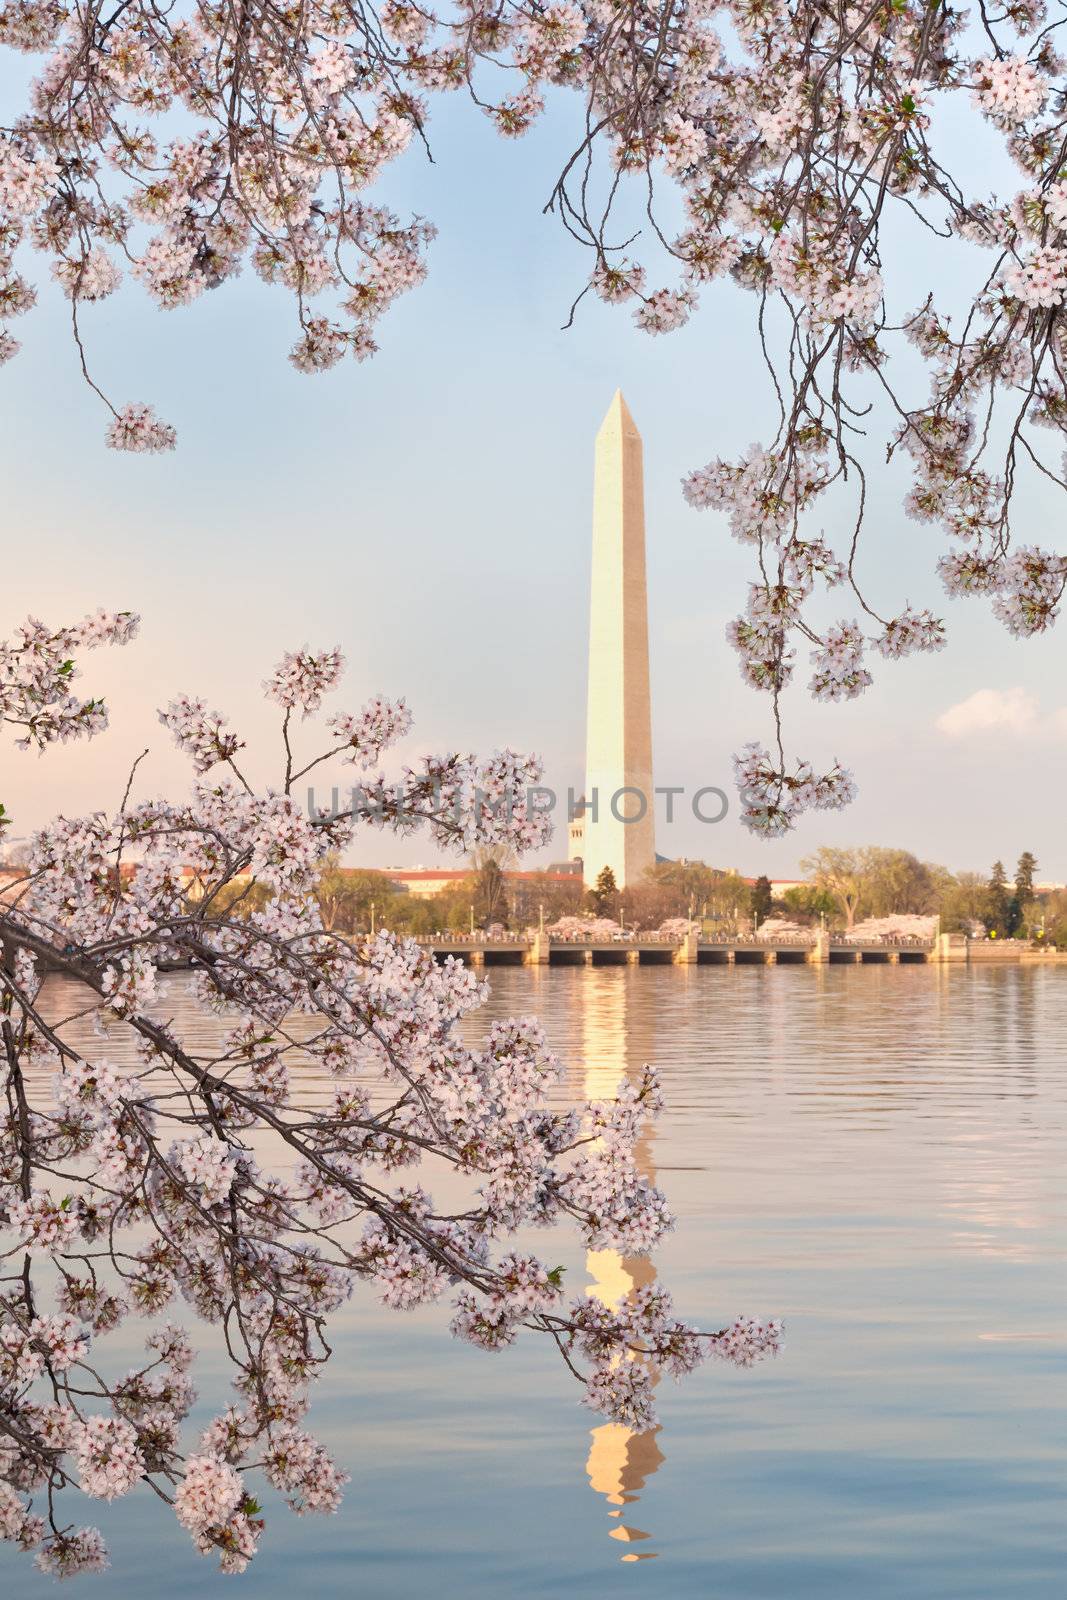 Washington DC Washington Monument Framed by Cherry Blossoms Bran by DashaRosato